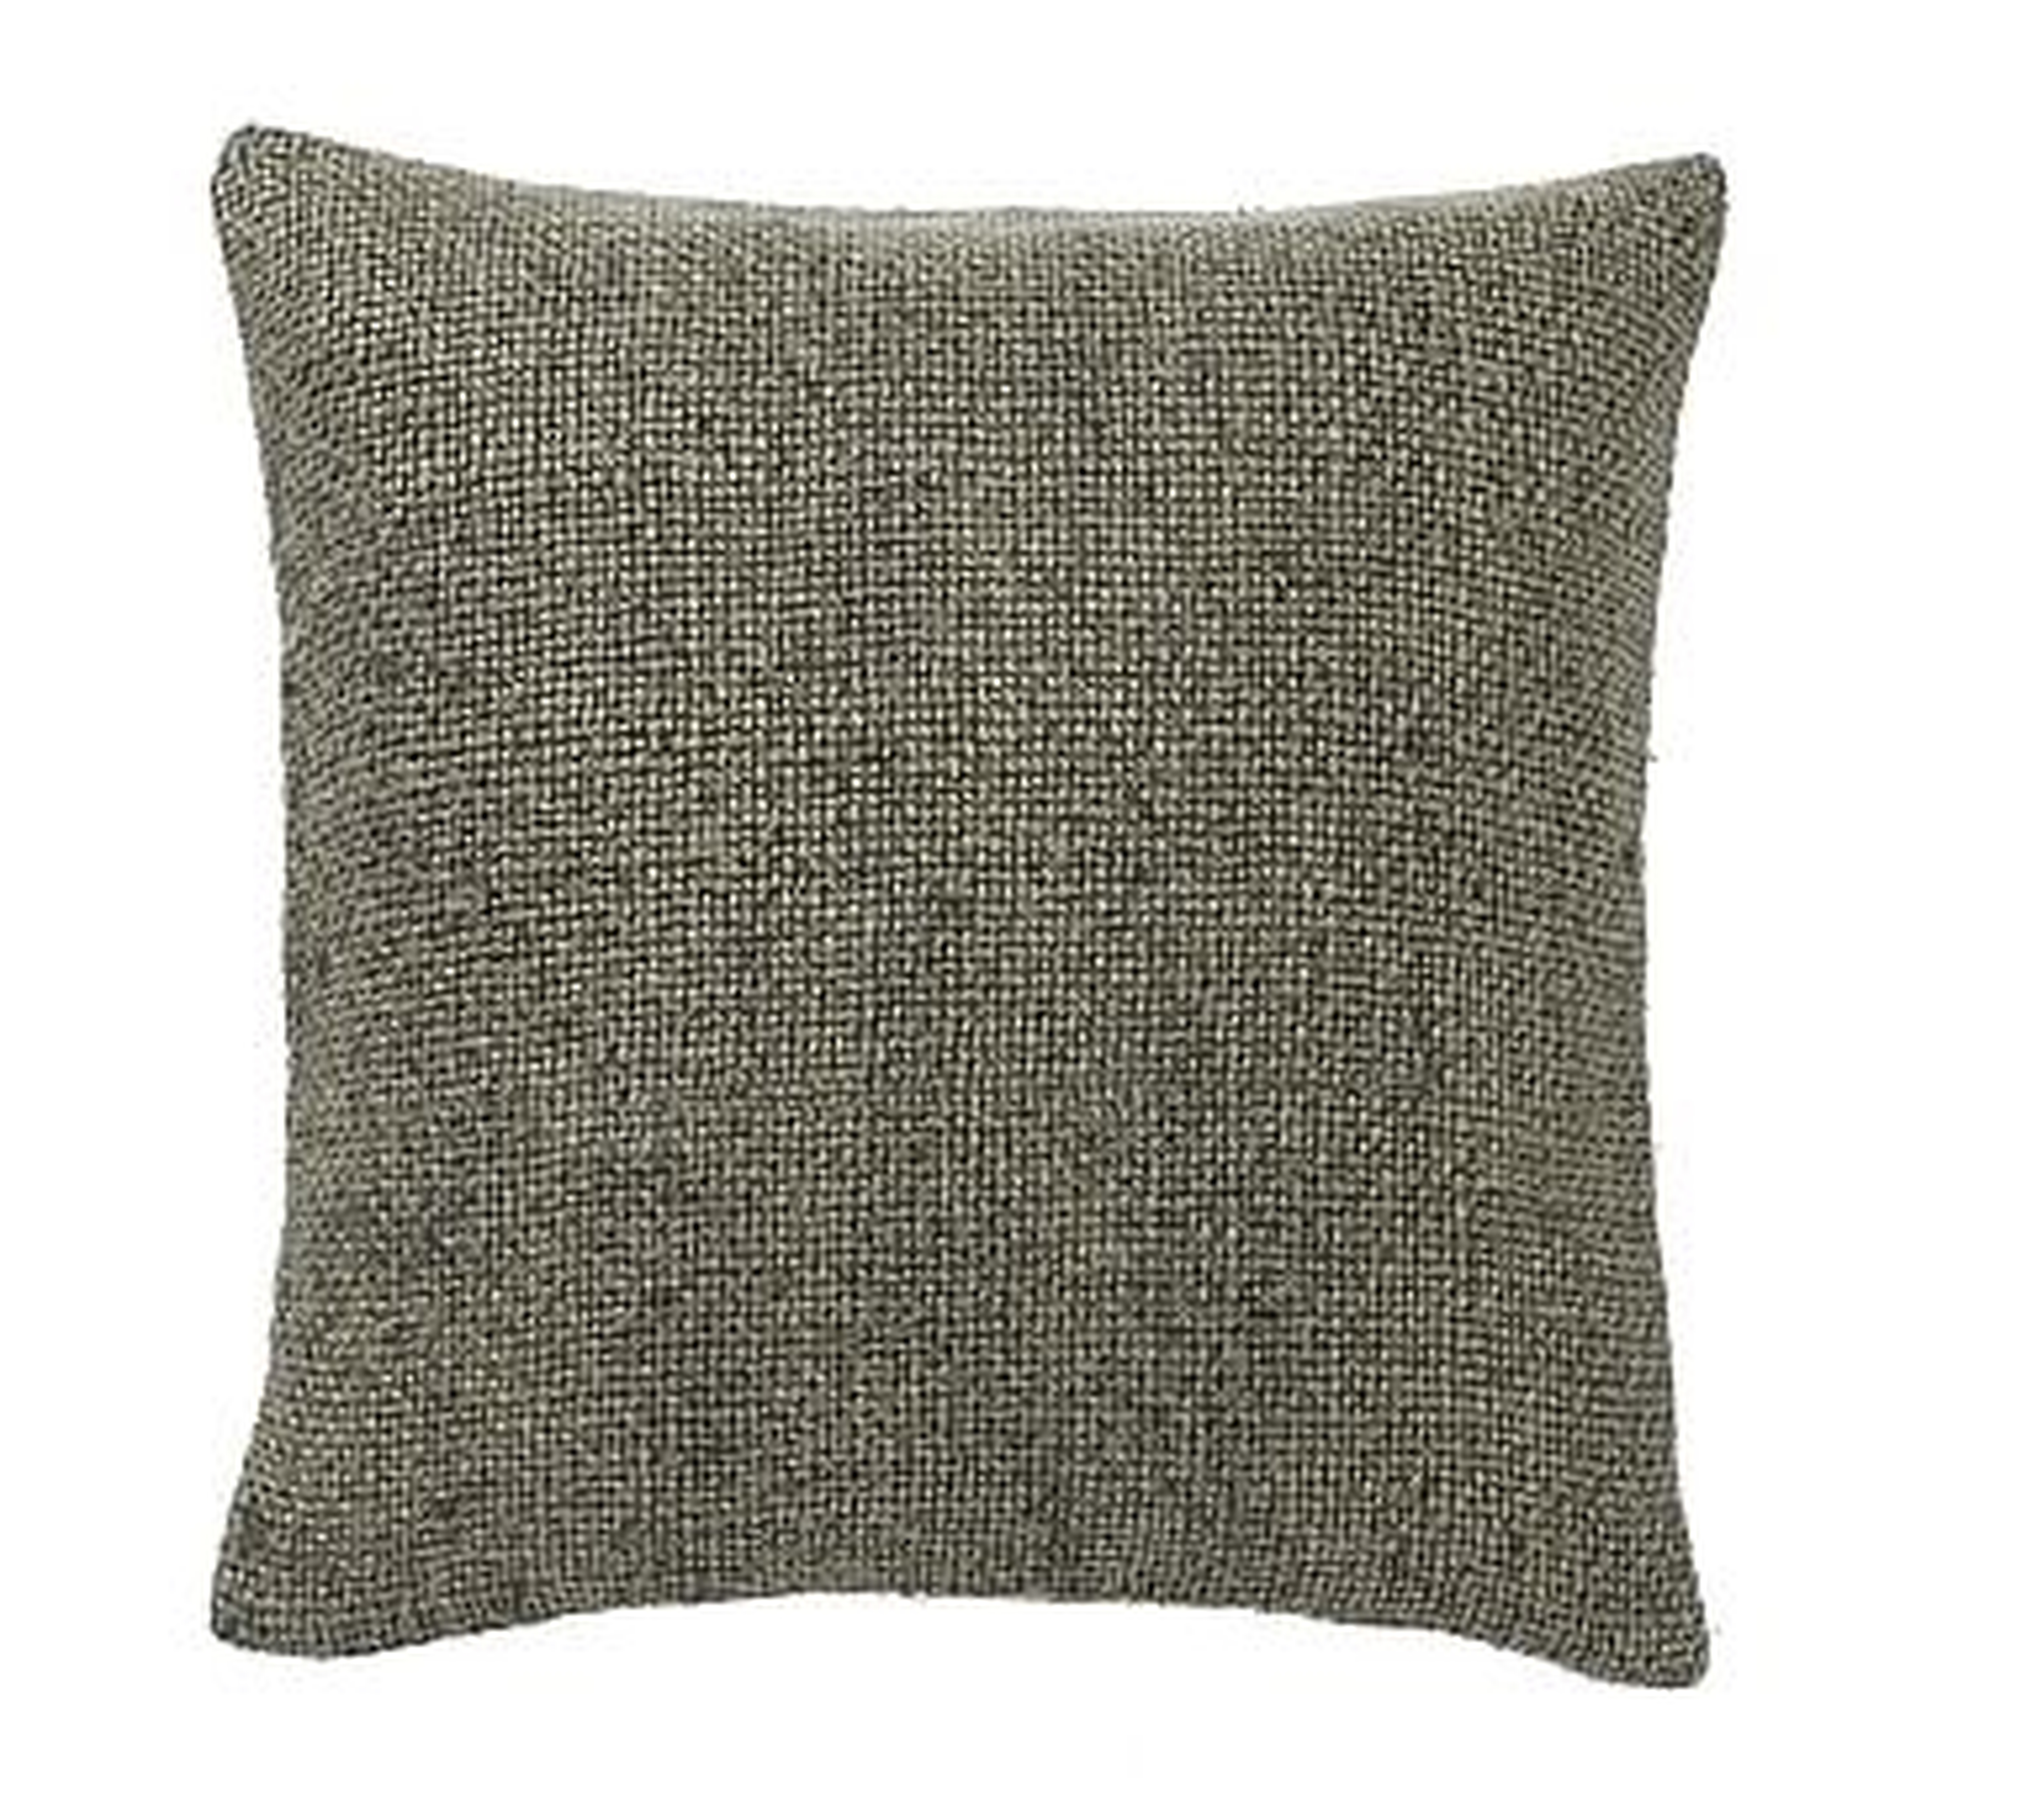 Faye Textured Linen Pillow Cover, 20", Sage Grass - Pottery Barn